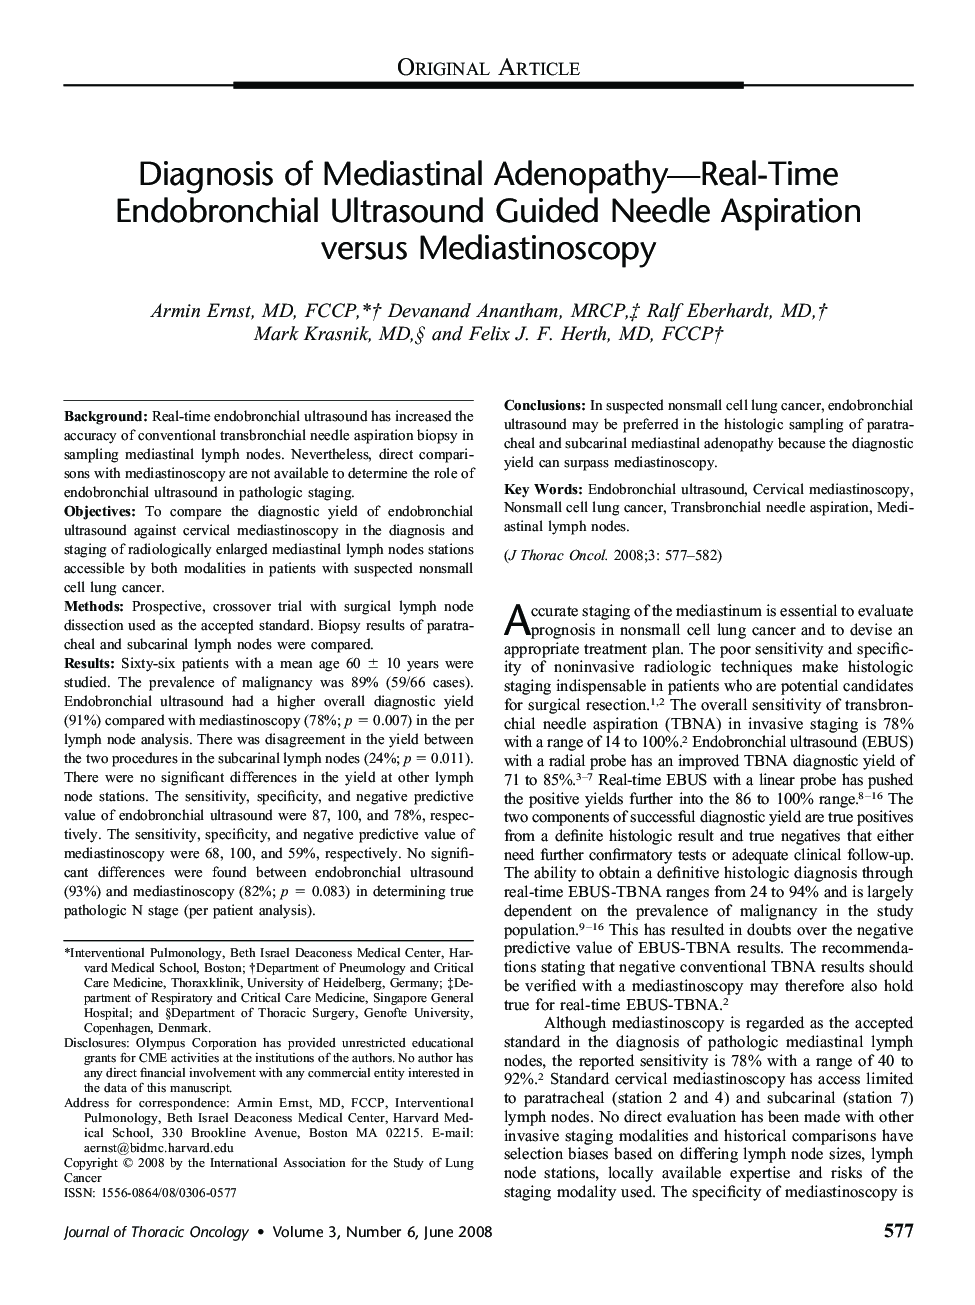 Diagnosis of Mediastinal Adenopathy—Real-Time Endobronchial Ultrasound Guided Needle Aspiration versus Mediastinoscopy 